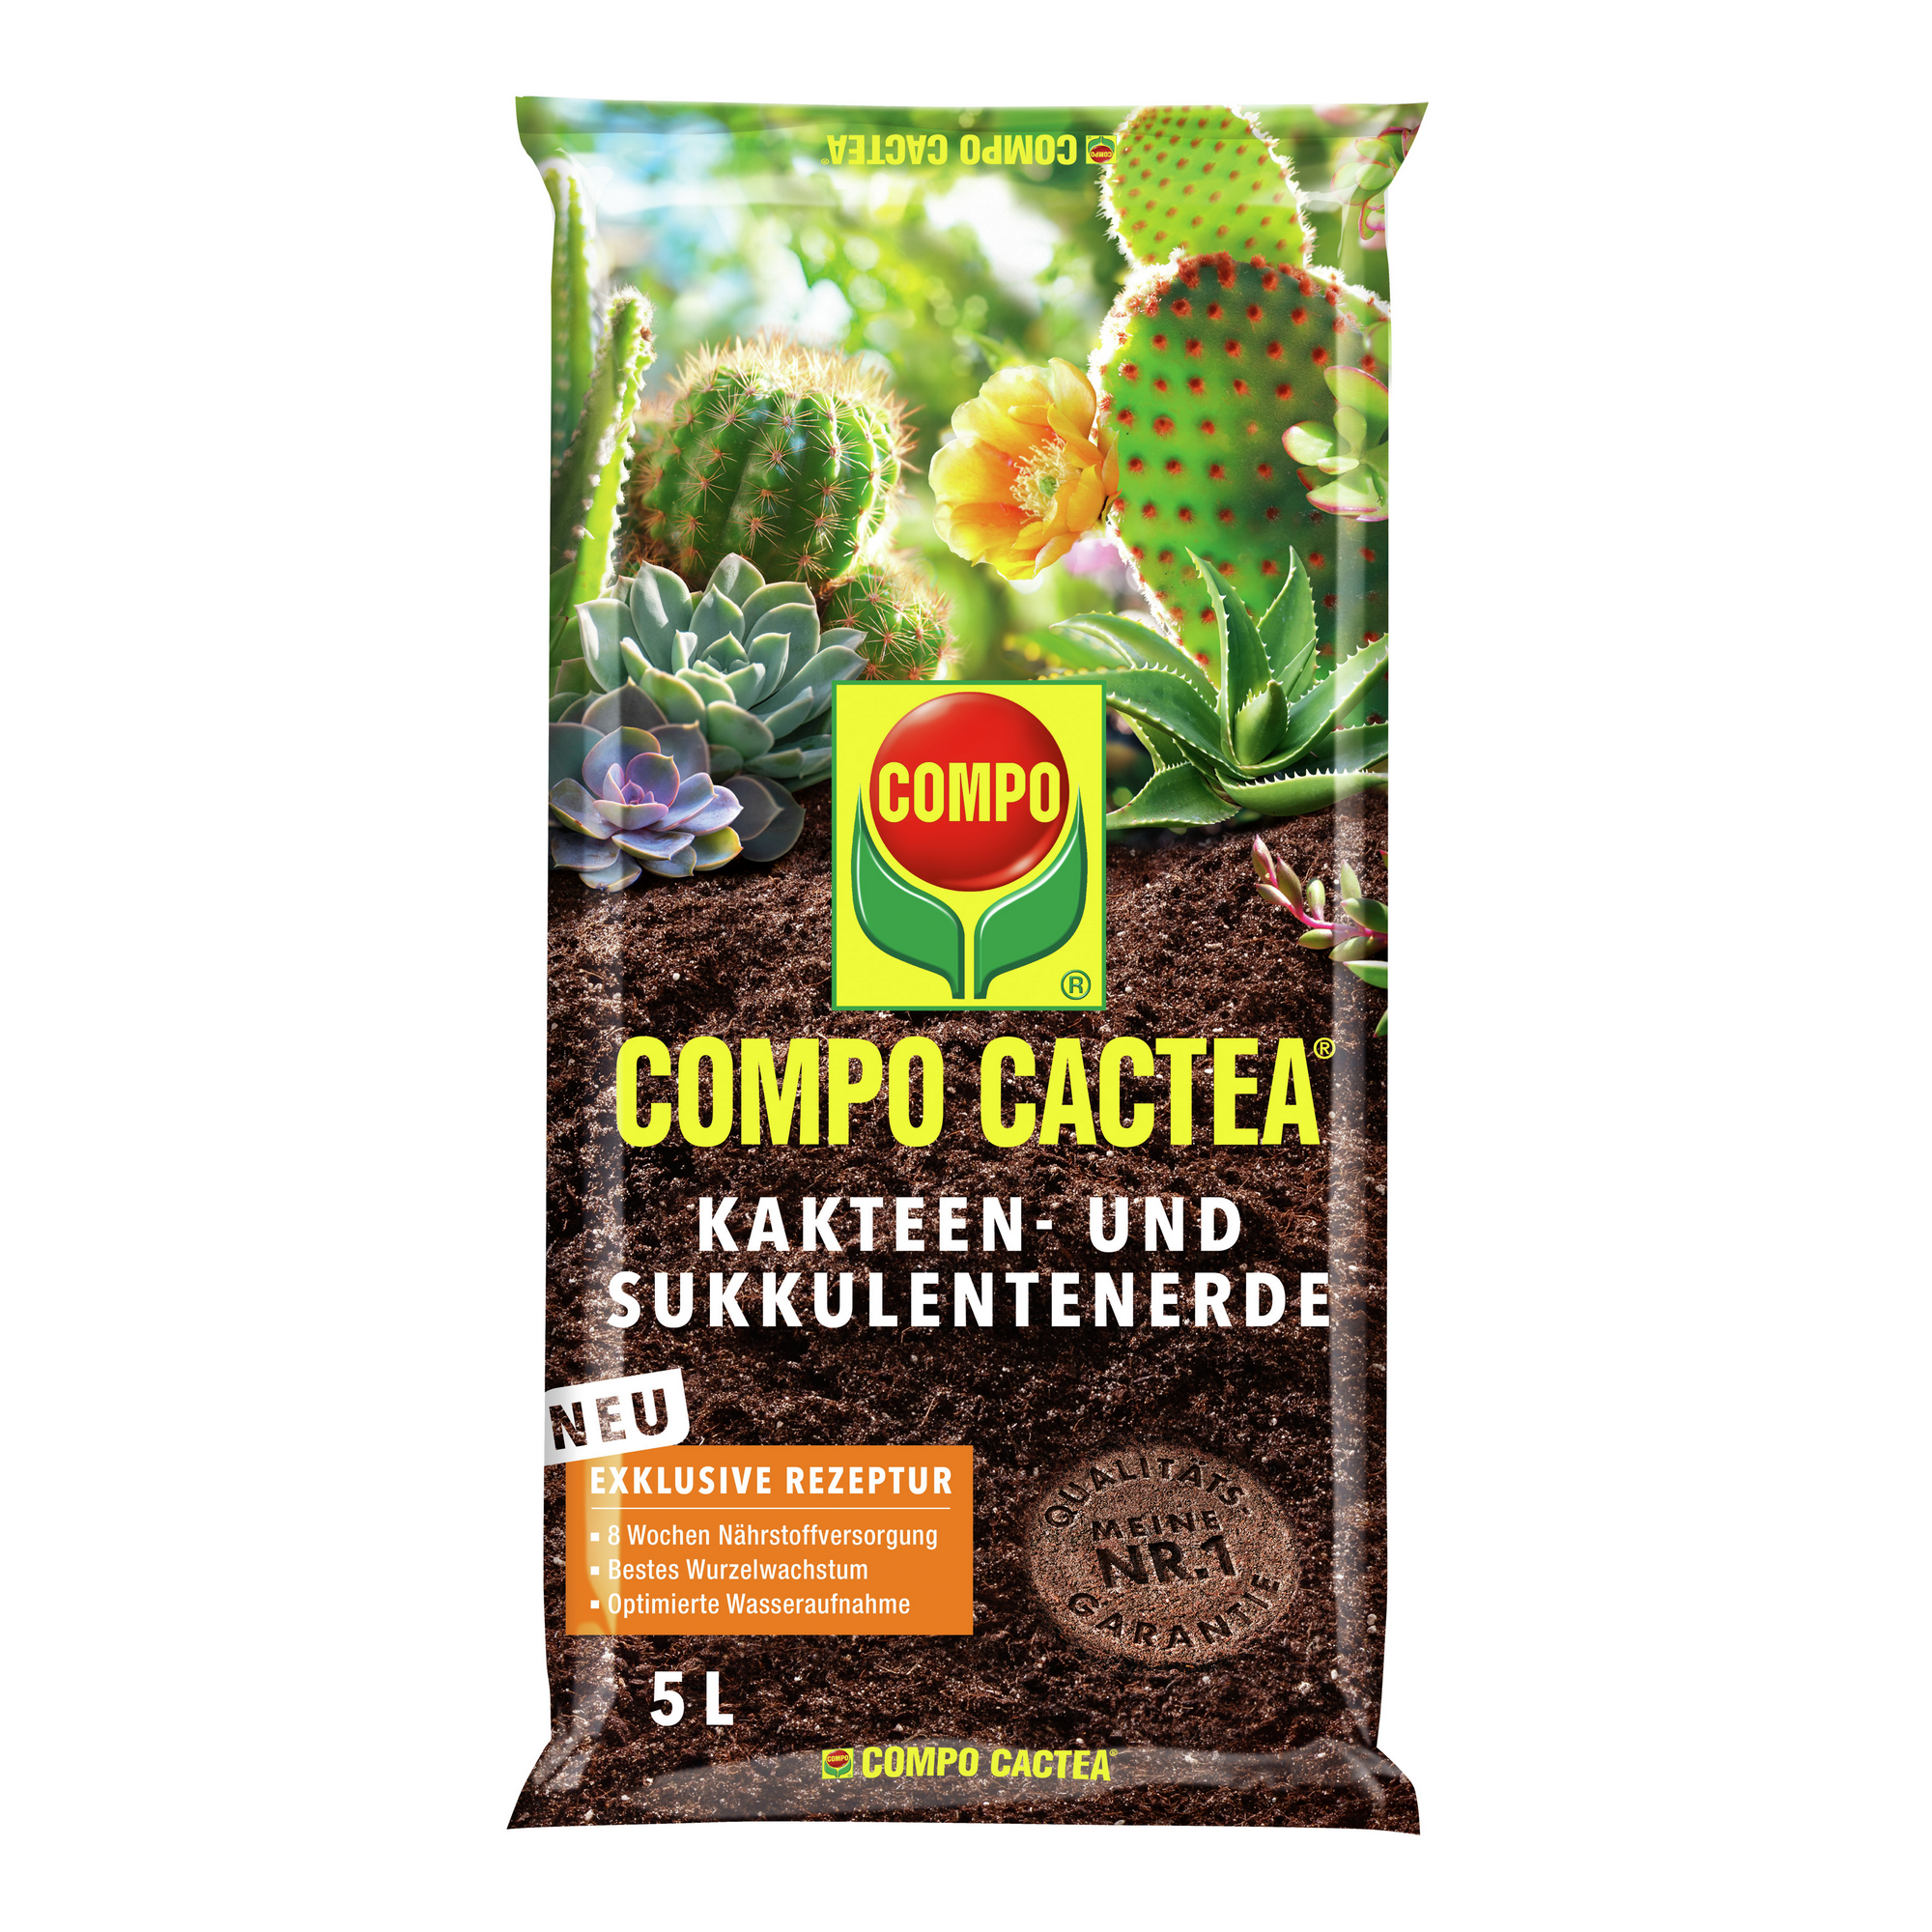 Compo Cactea® Kakteen- und Sukkulentenerde 5 l + product picture